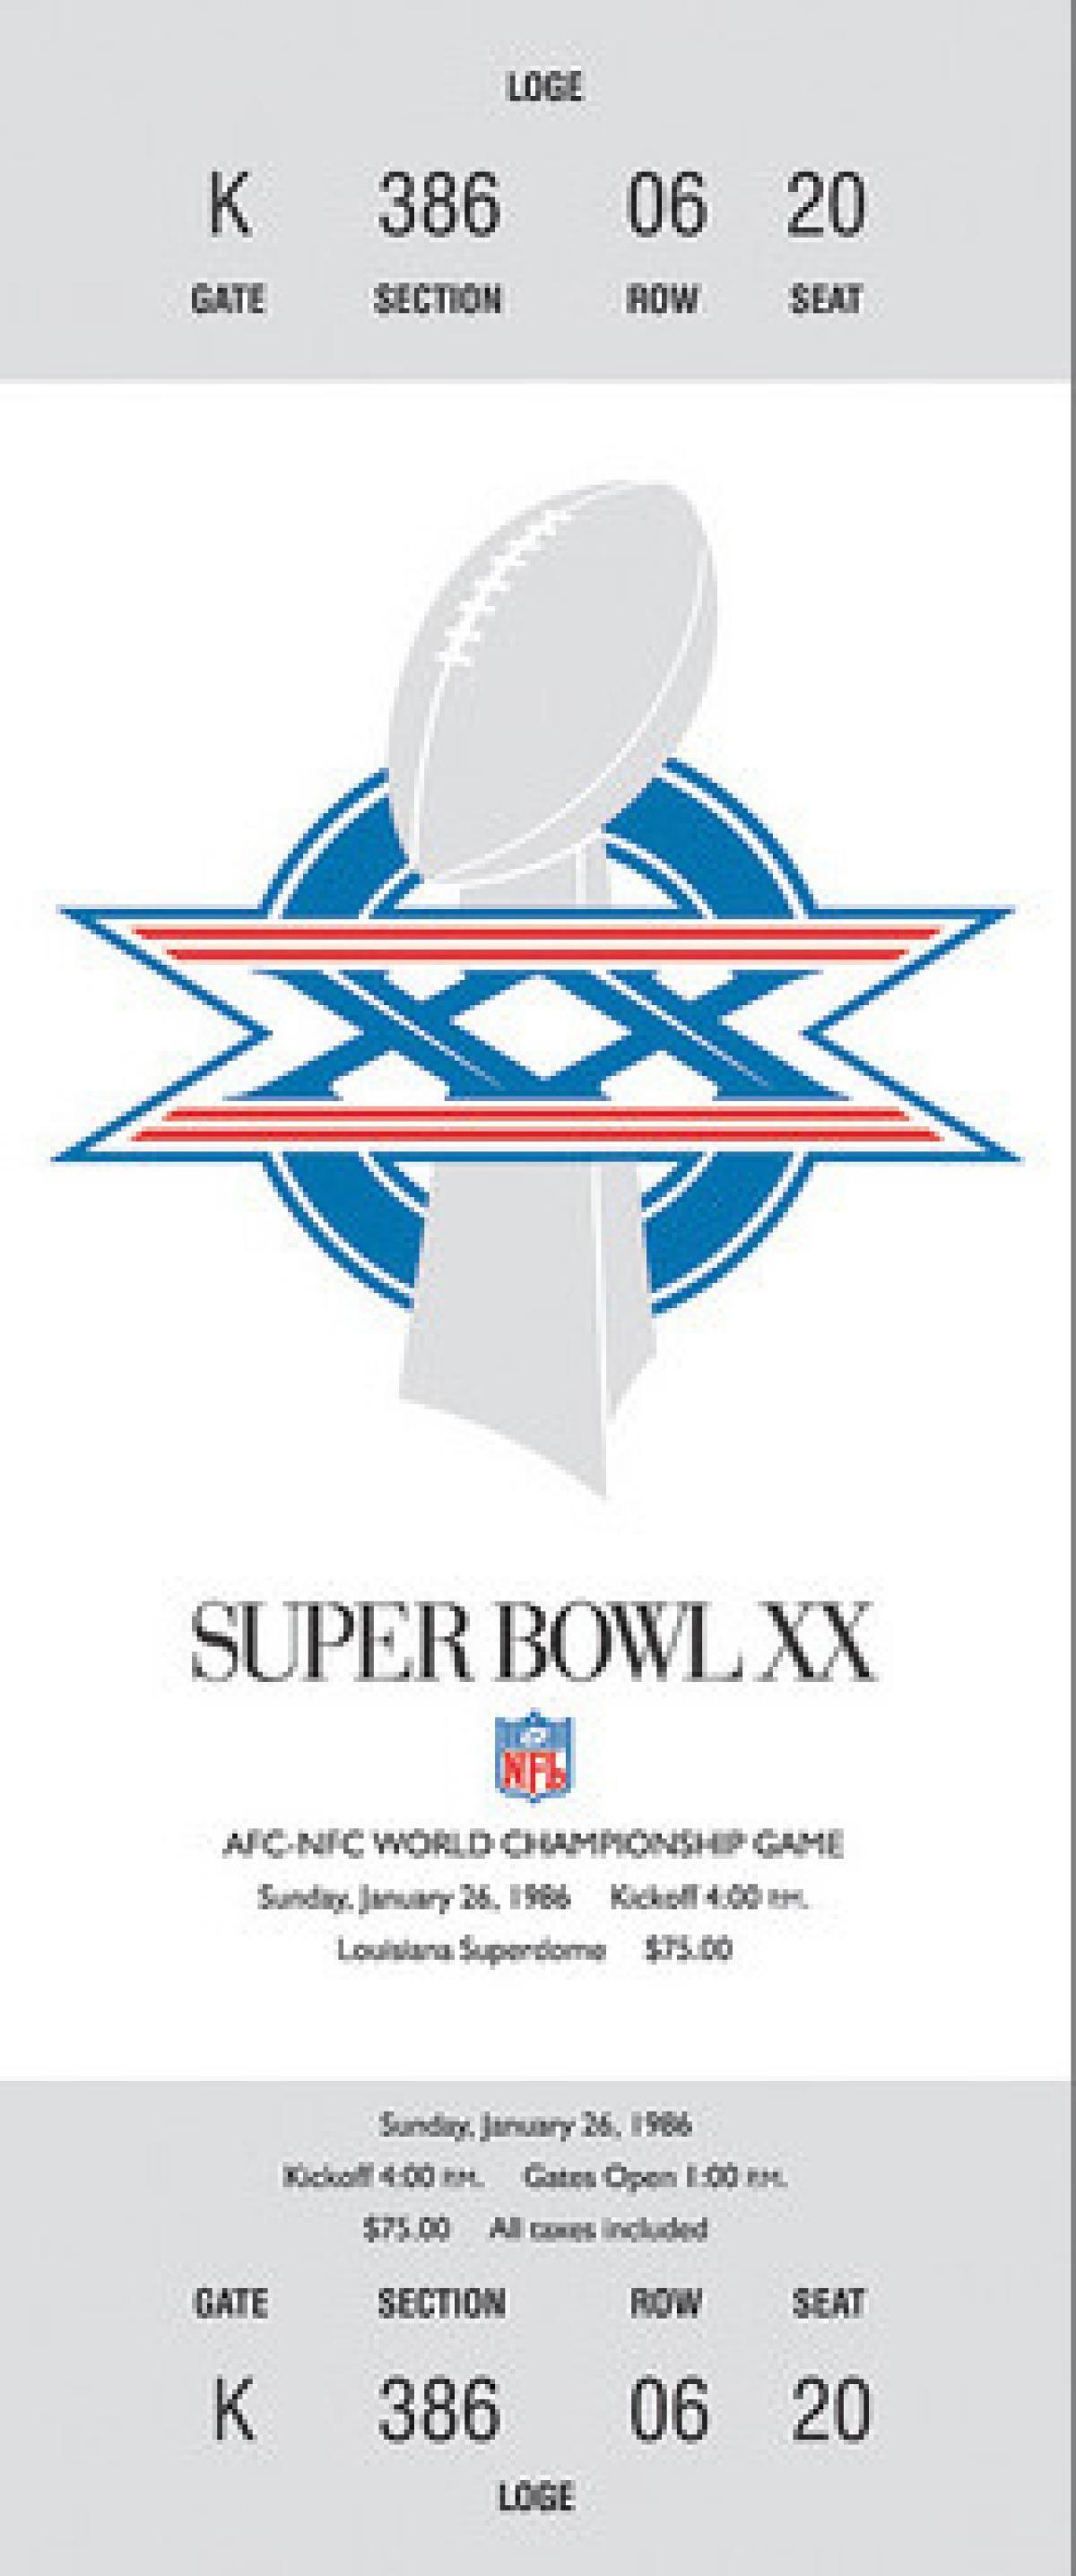 Super Bowl Xx Logo - Super Bowl Database- Every Single Super Bowl Video Ever